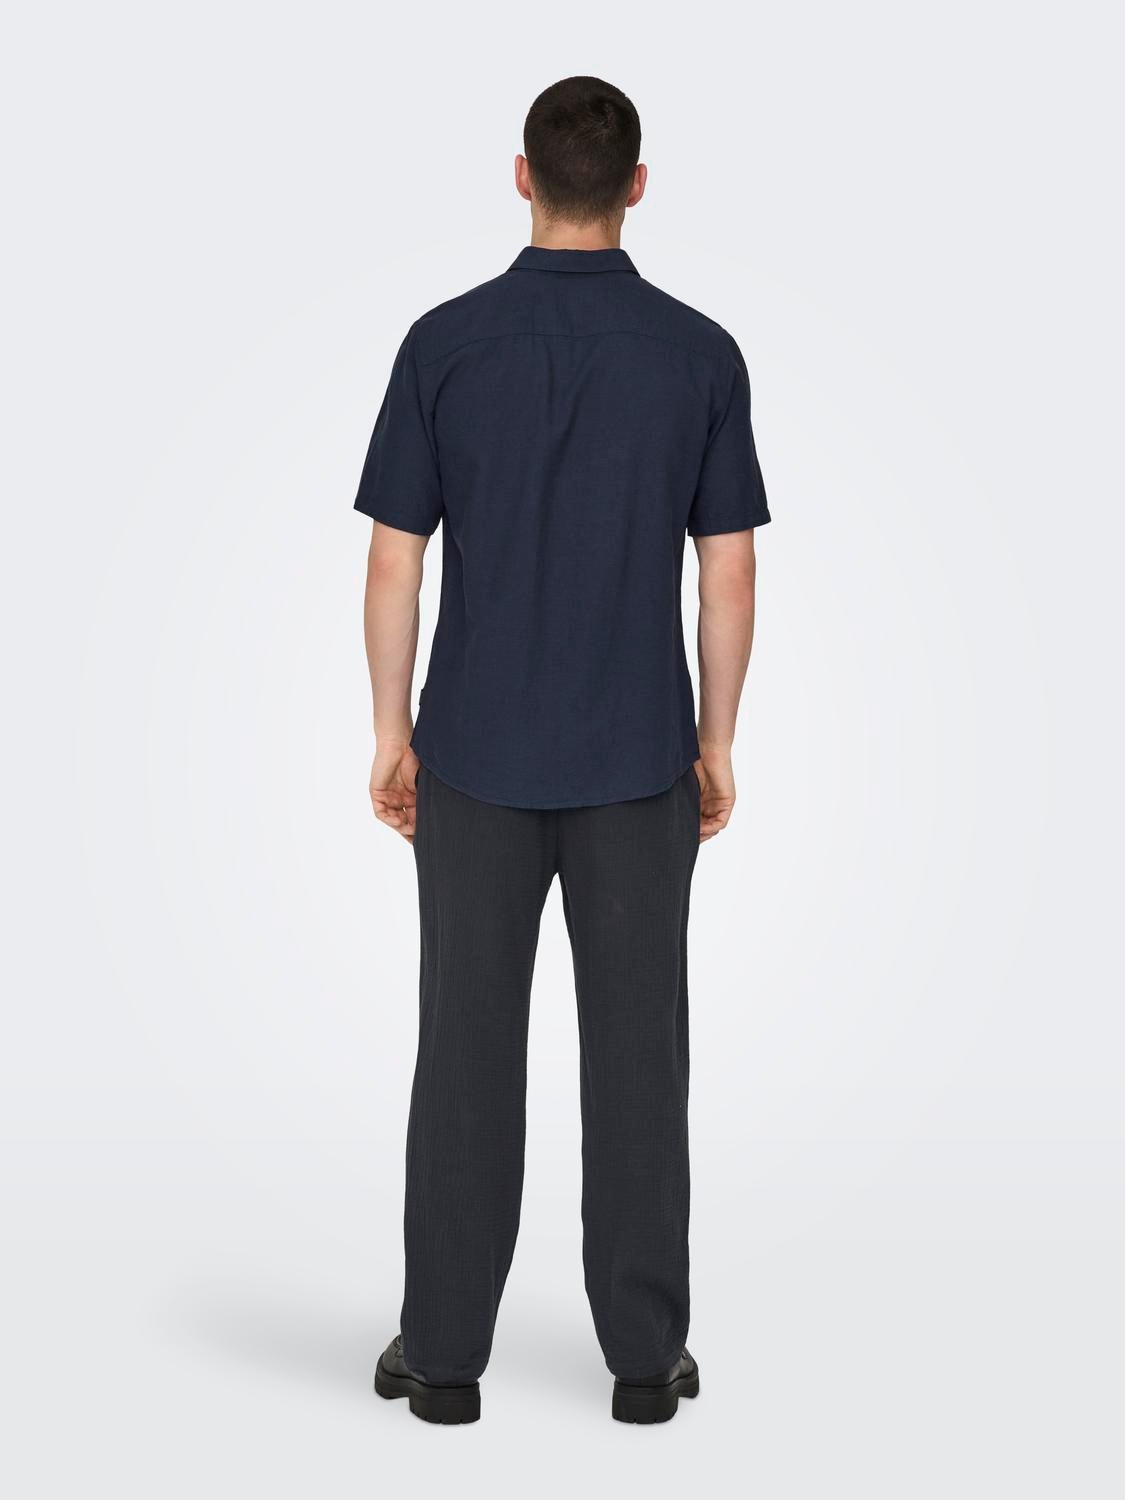 ONLY & SONS Slim Fit Shirt collar Shirt -Night Sky - 22009885